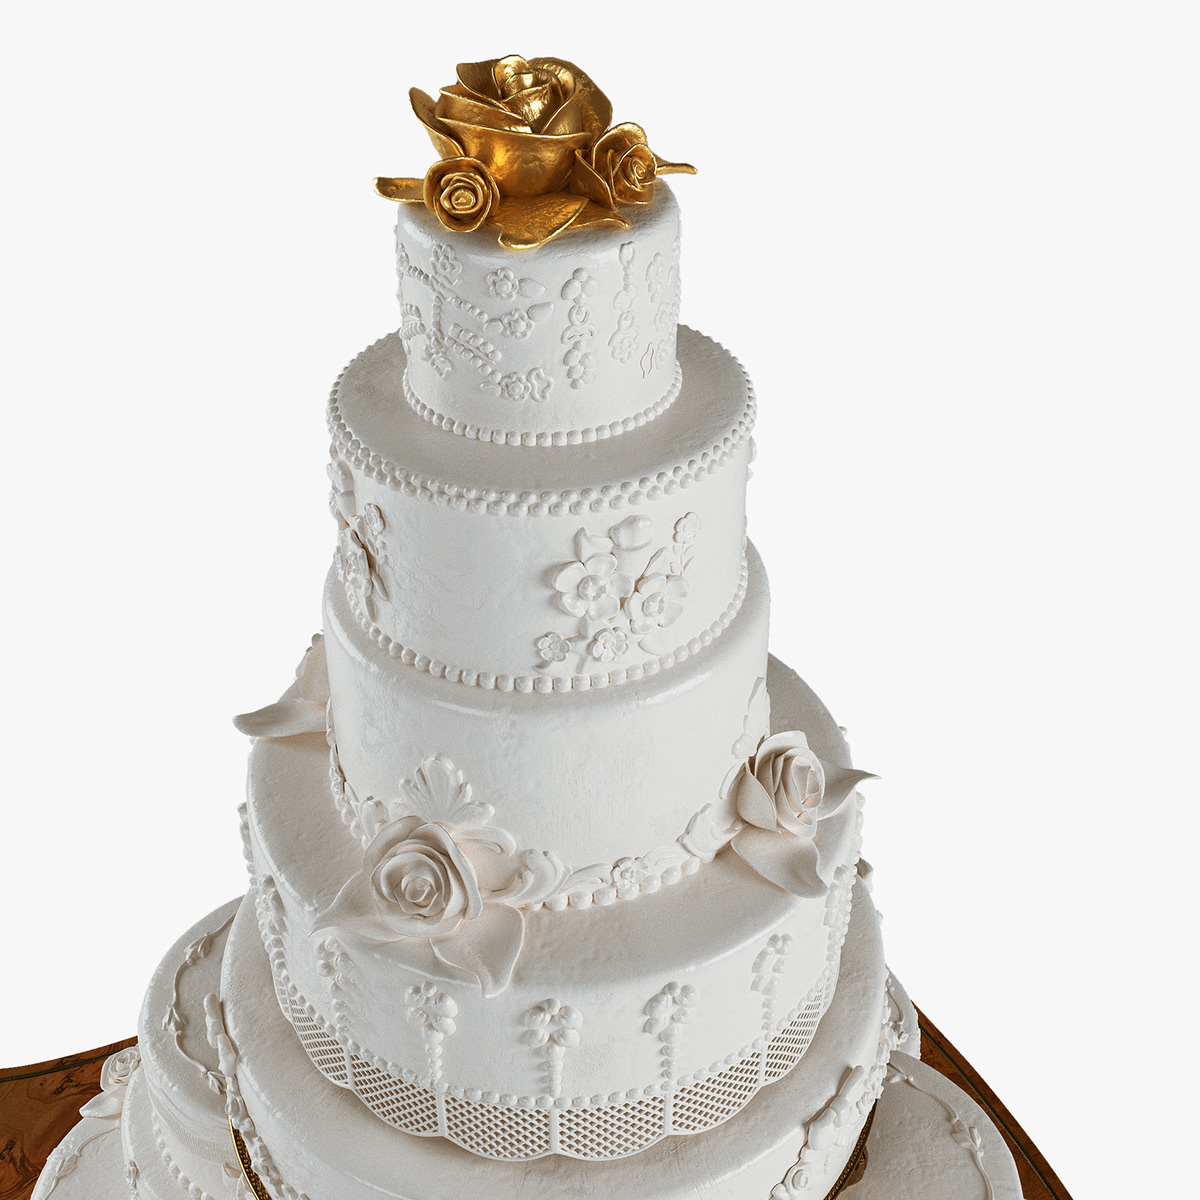 Image may contain: cake, wedding and wedding cake